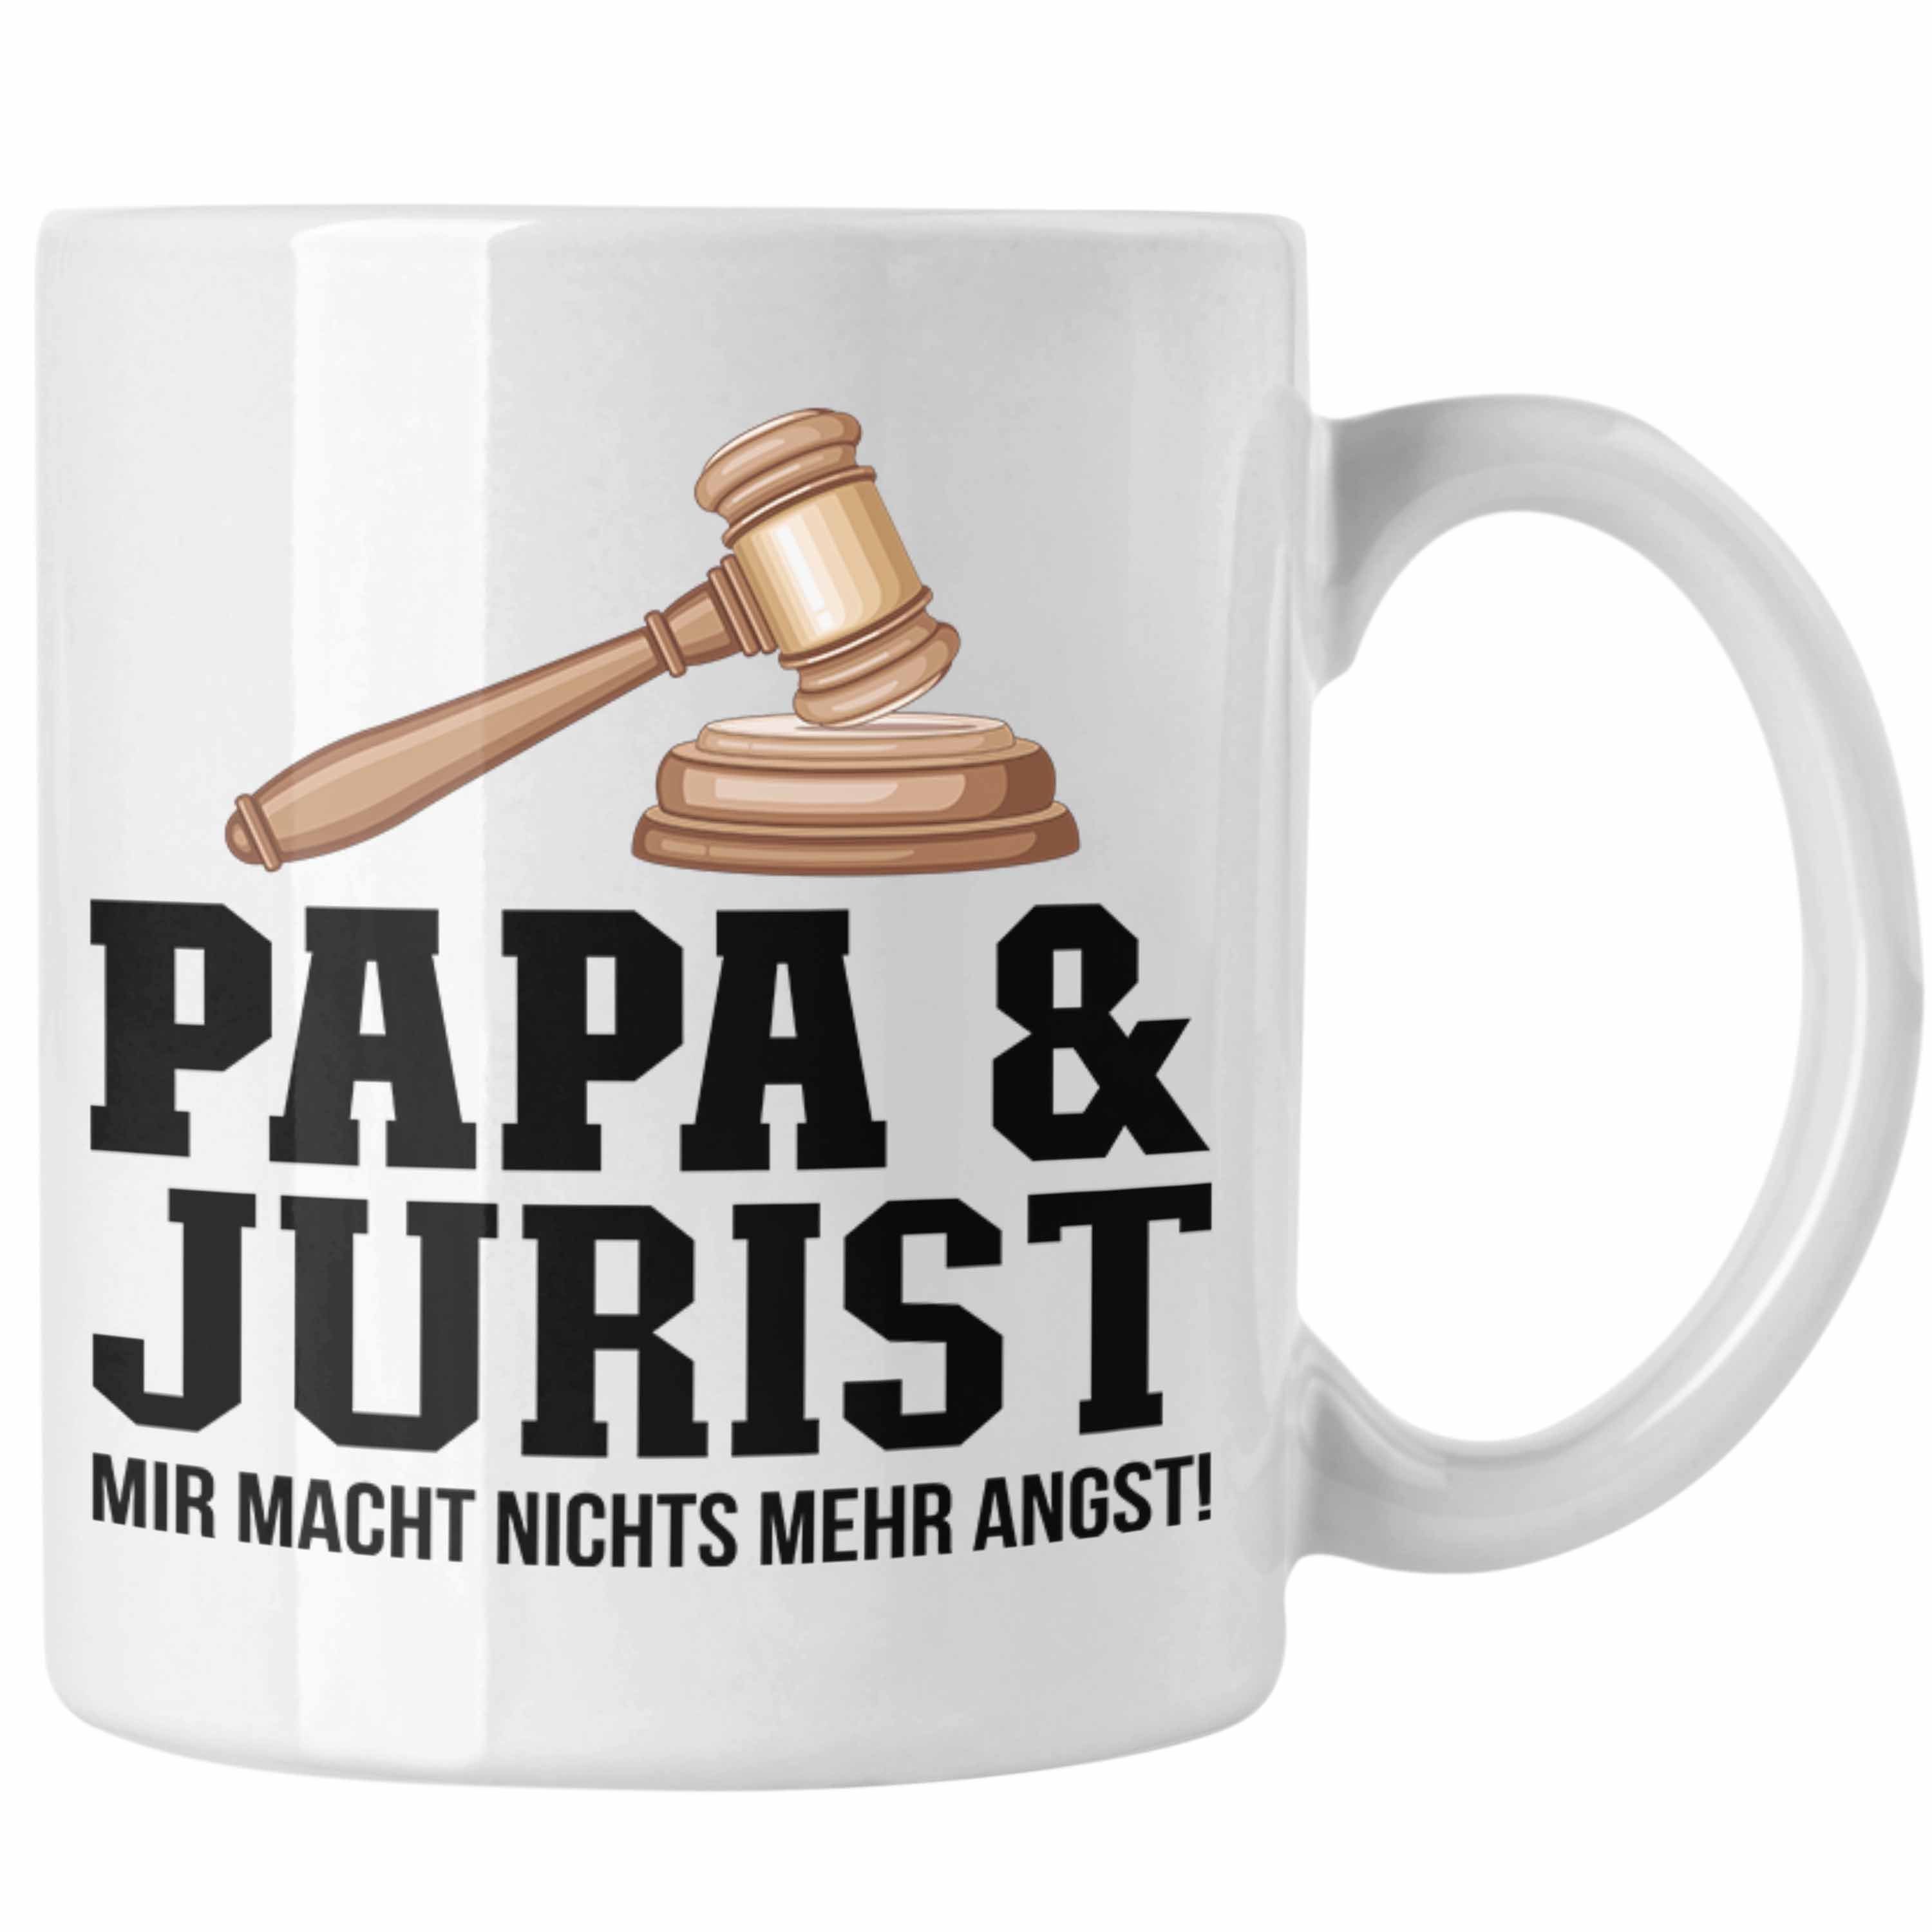 Trendation Jura Geschenkidee Tasse Papa Vater Trendation Jurist - und Weiss Tasse Juriste für